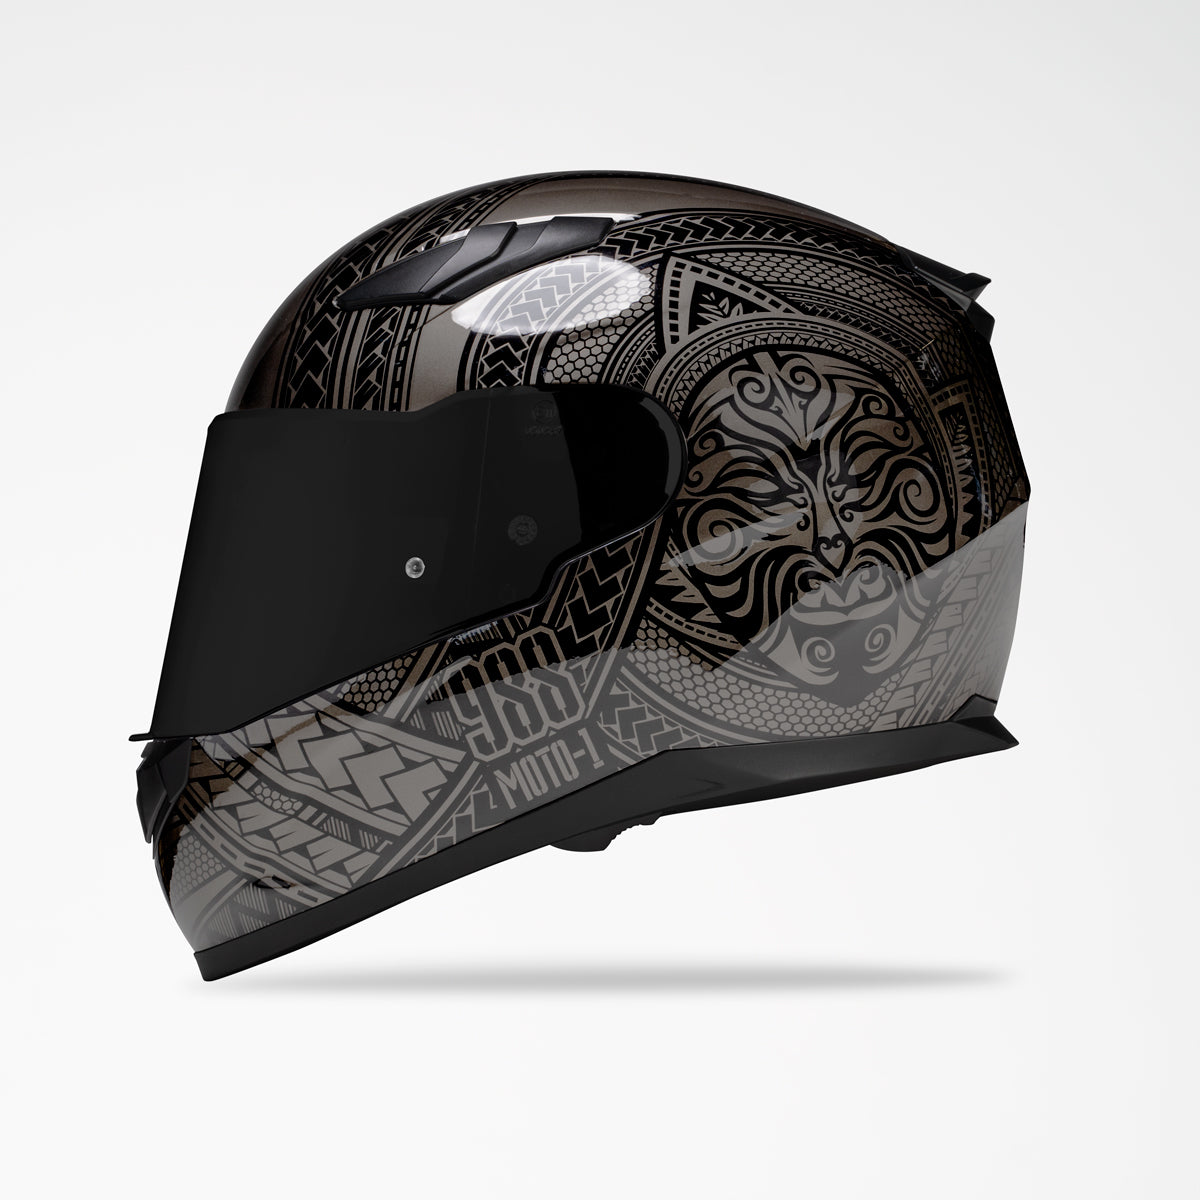 VOSS 988 MOTO-1 TWO-TONE BLACK CODEX HELMET - Voss Helmets